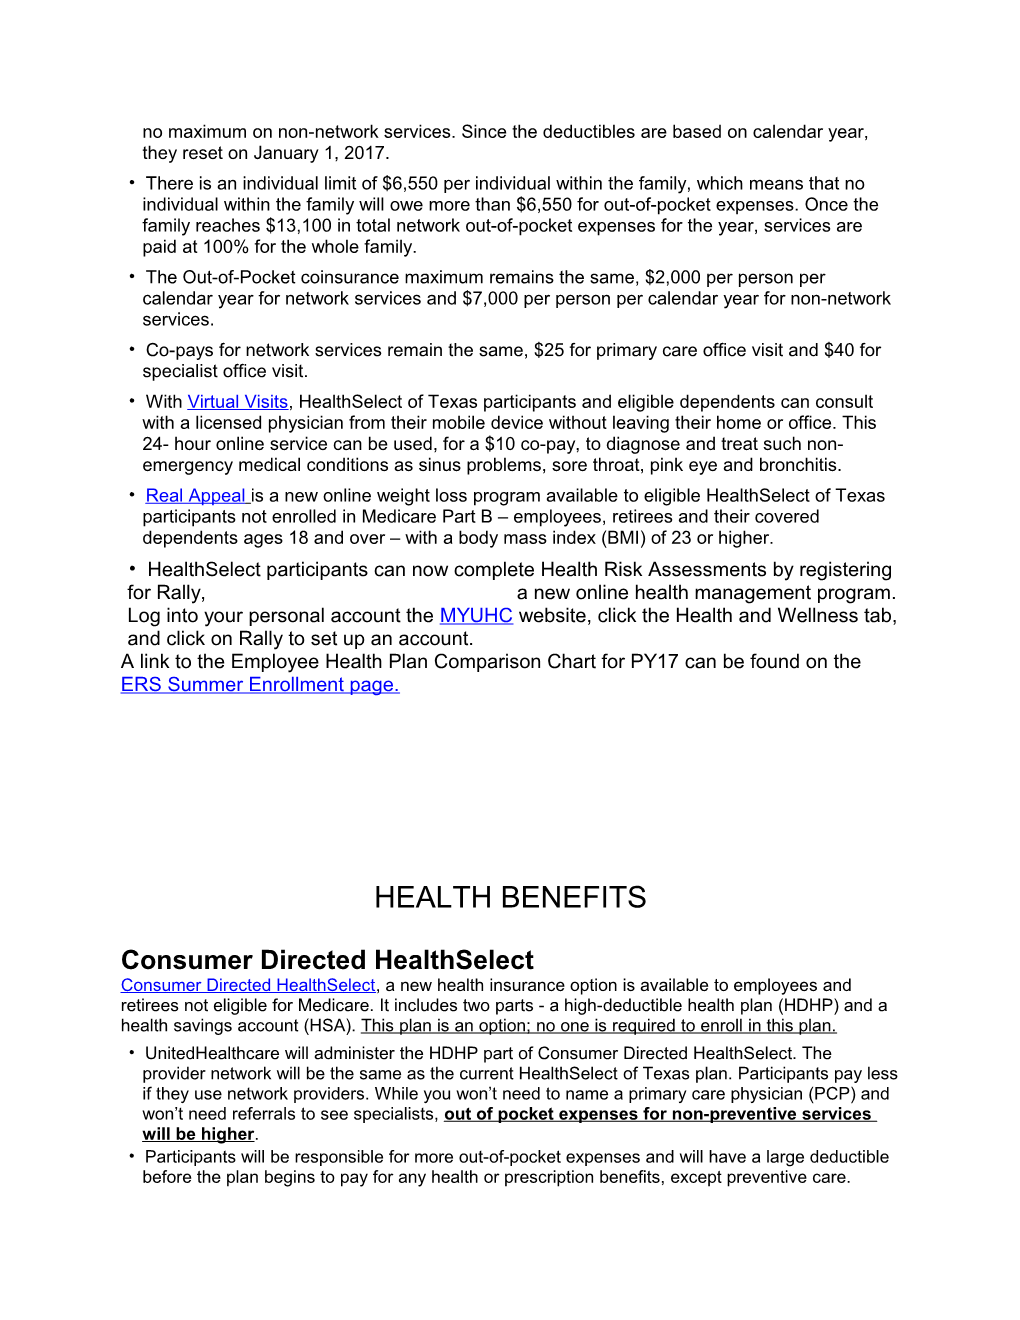 Texas Employees Group Benefits Program (Gbp)